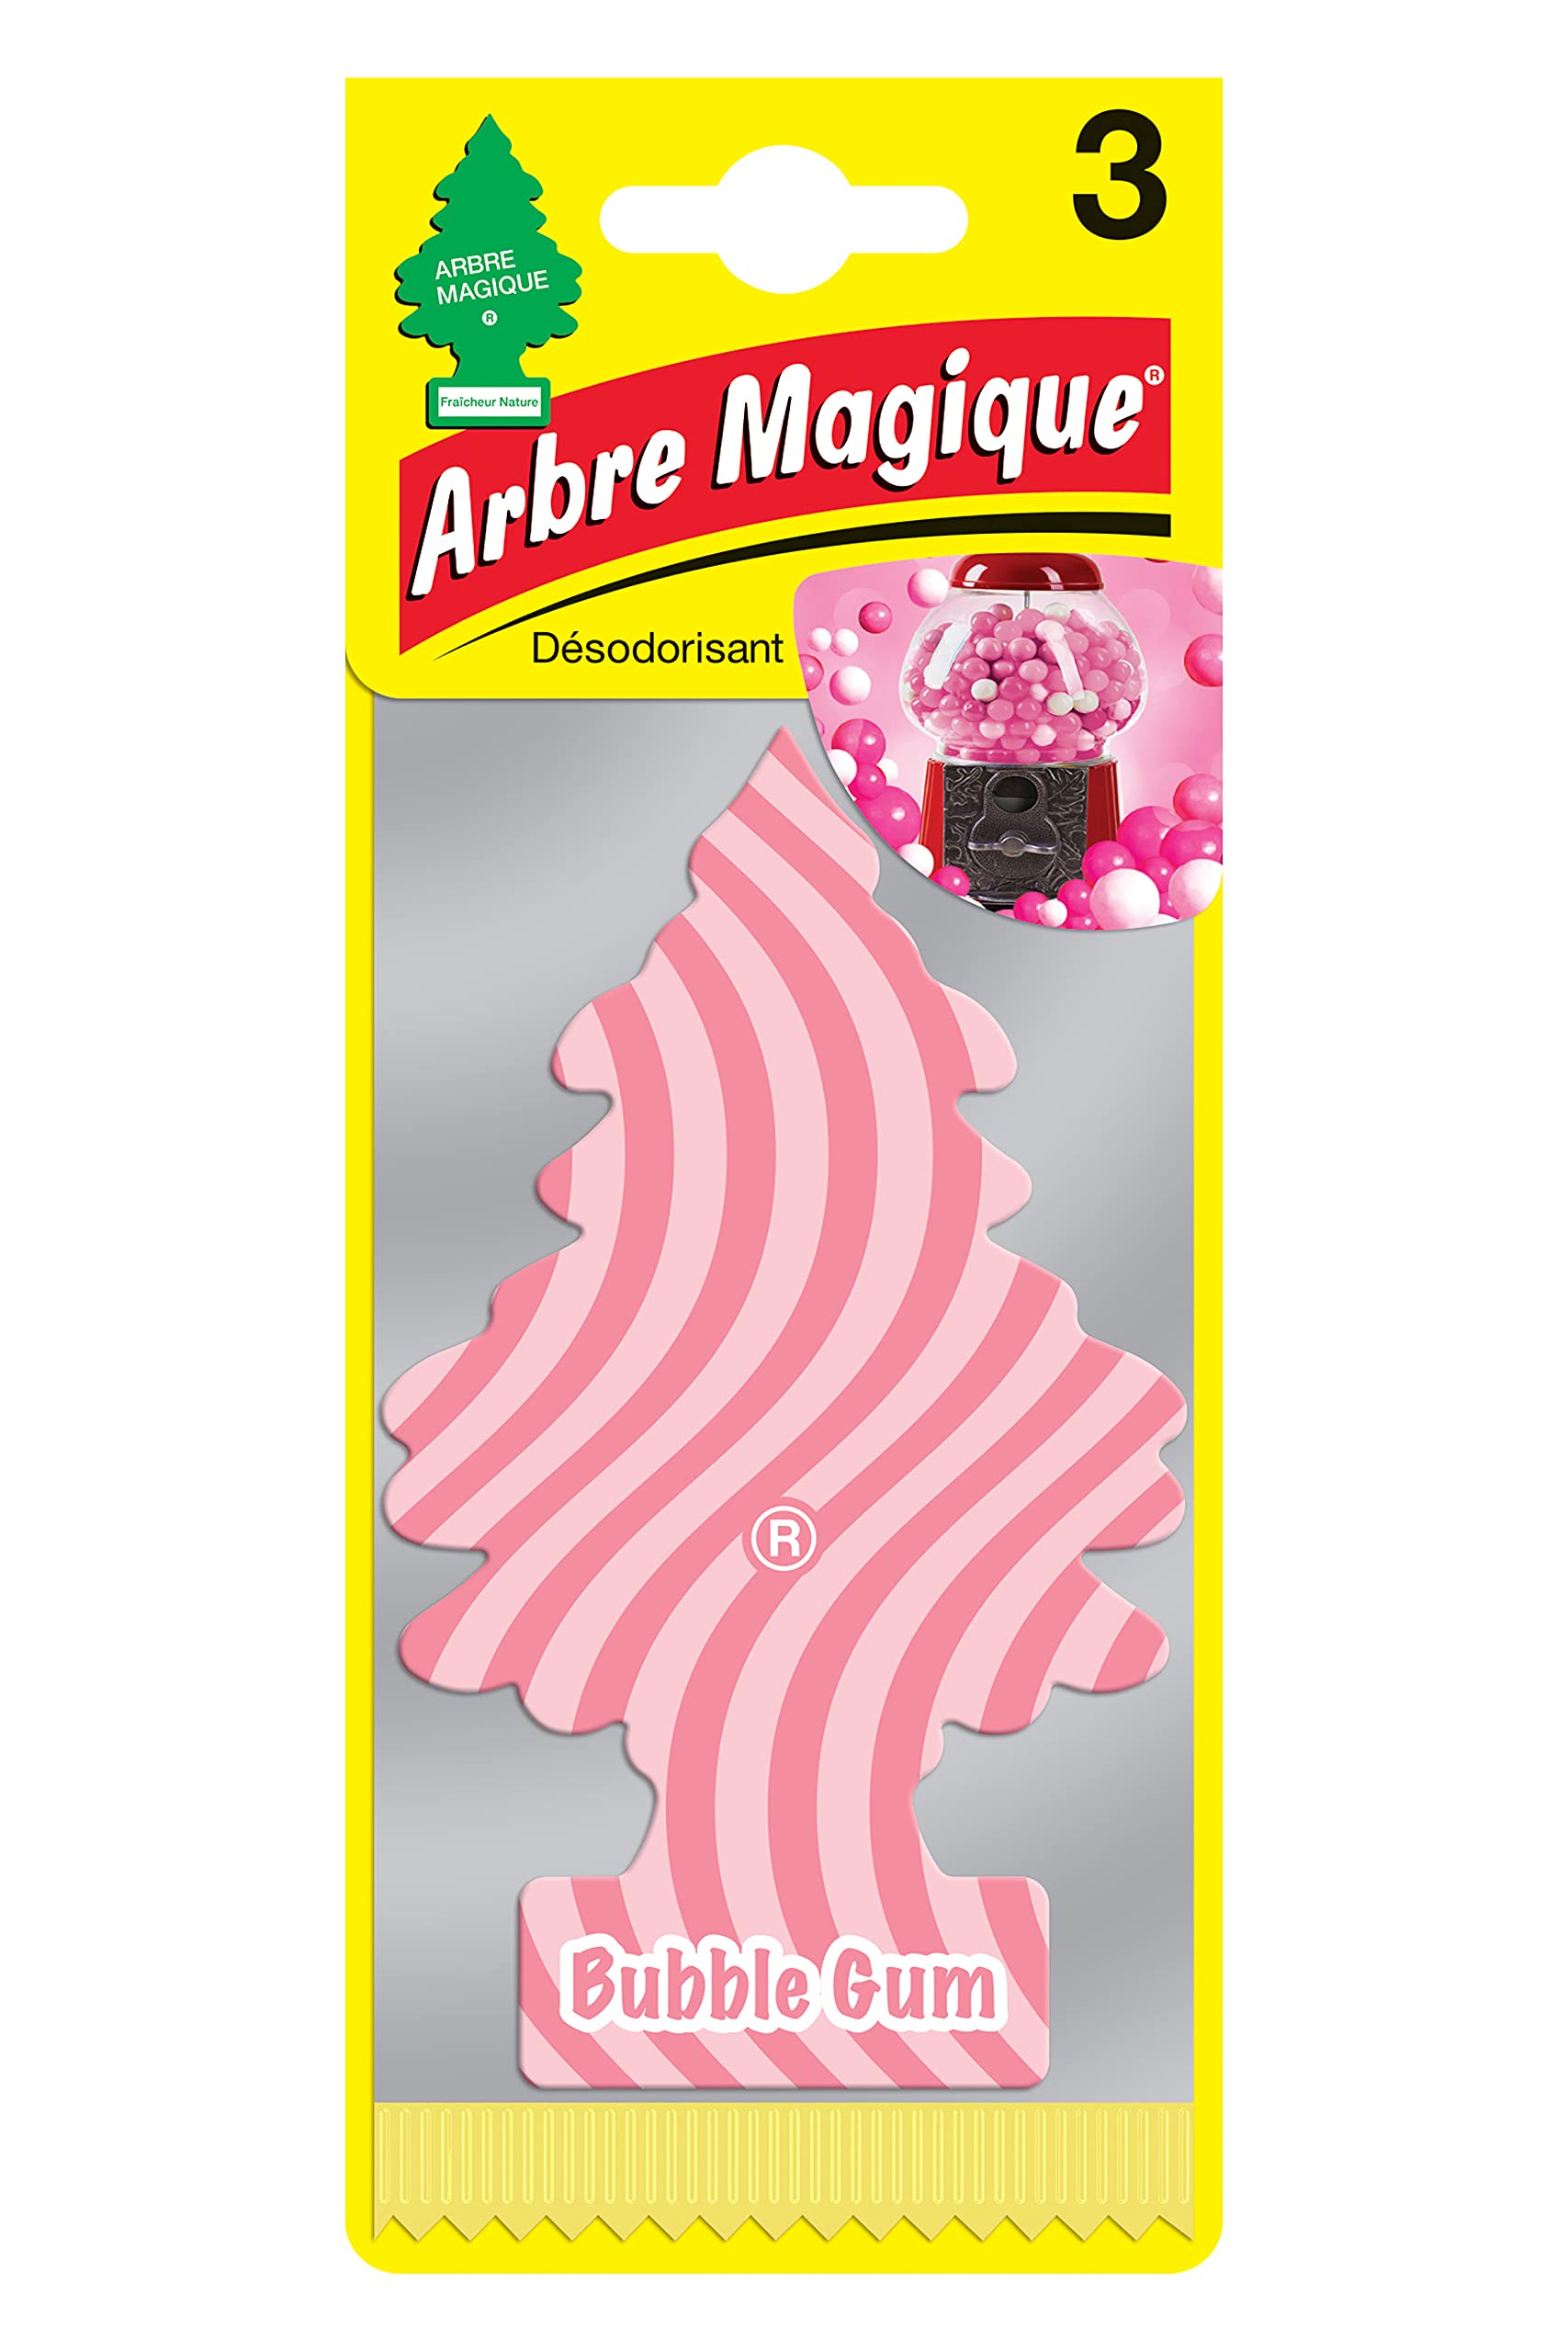 Arbre Magique Bubble Gum Duft, 3er Set, Rosa/Weiß, PER90526 von Arbre Magique